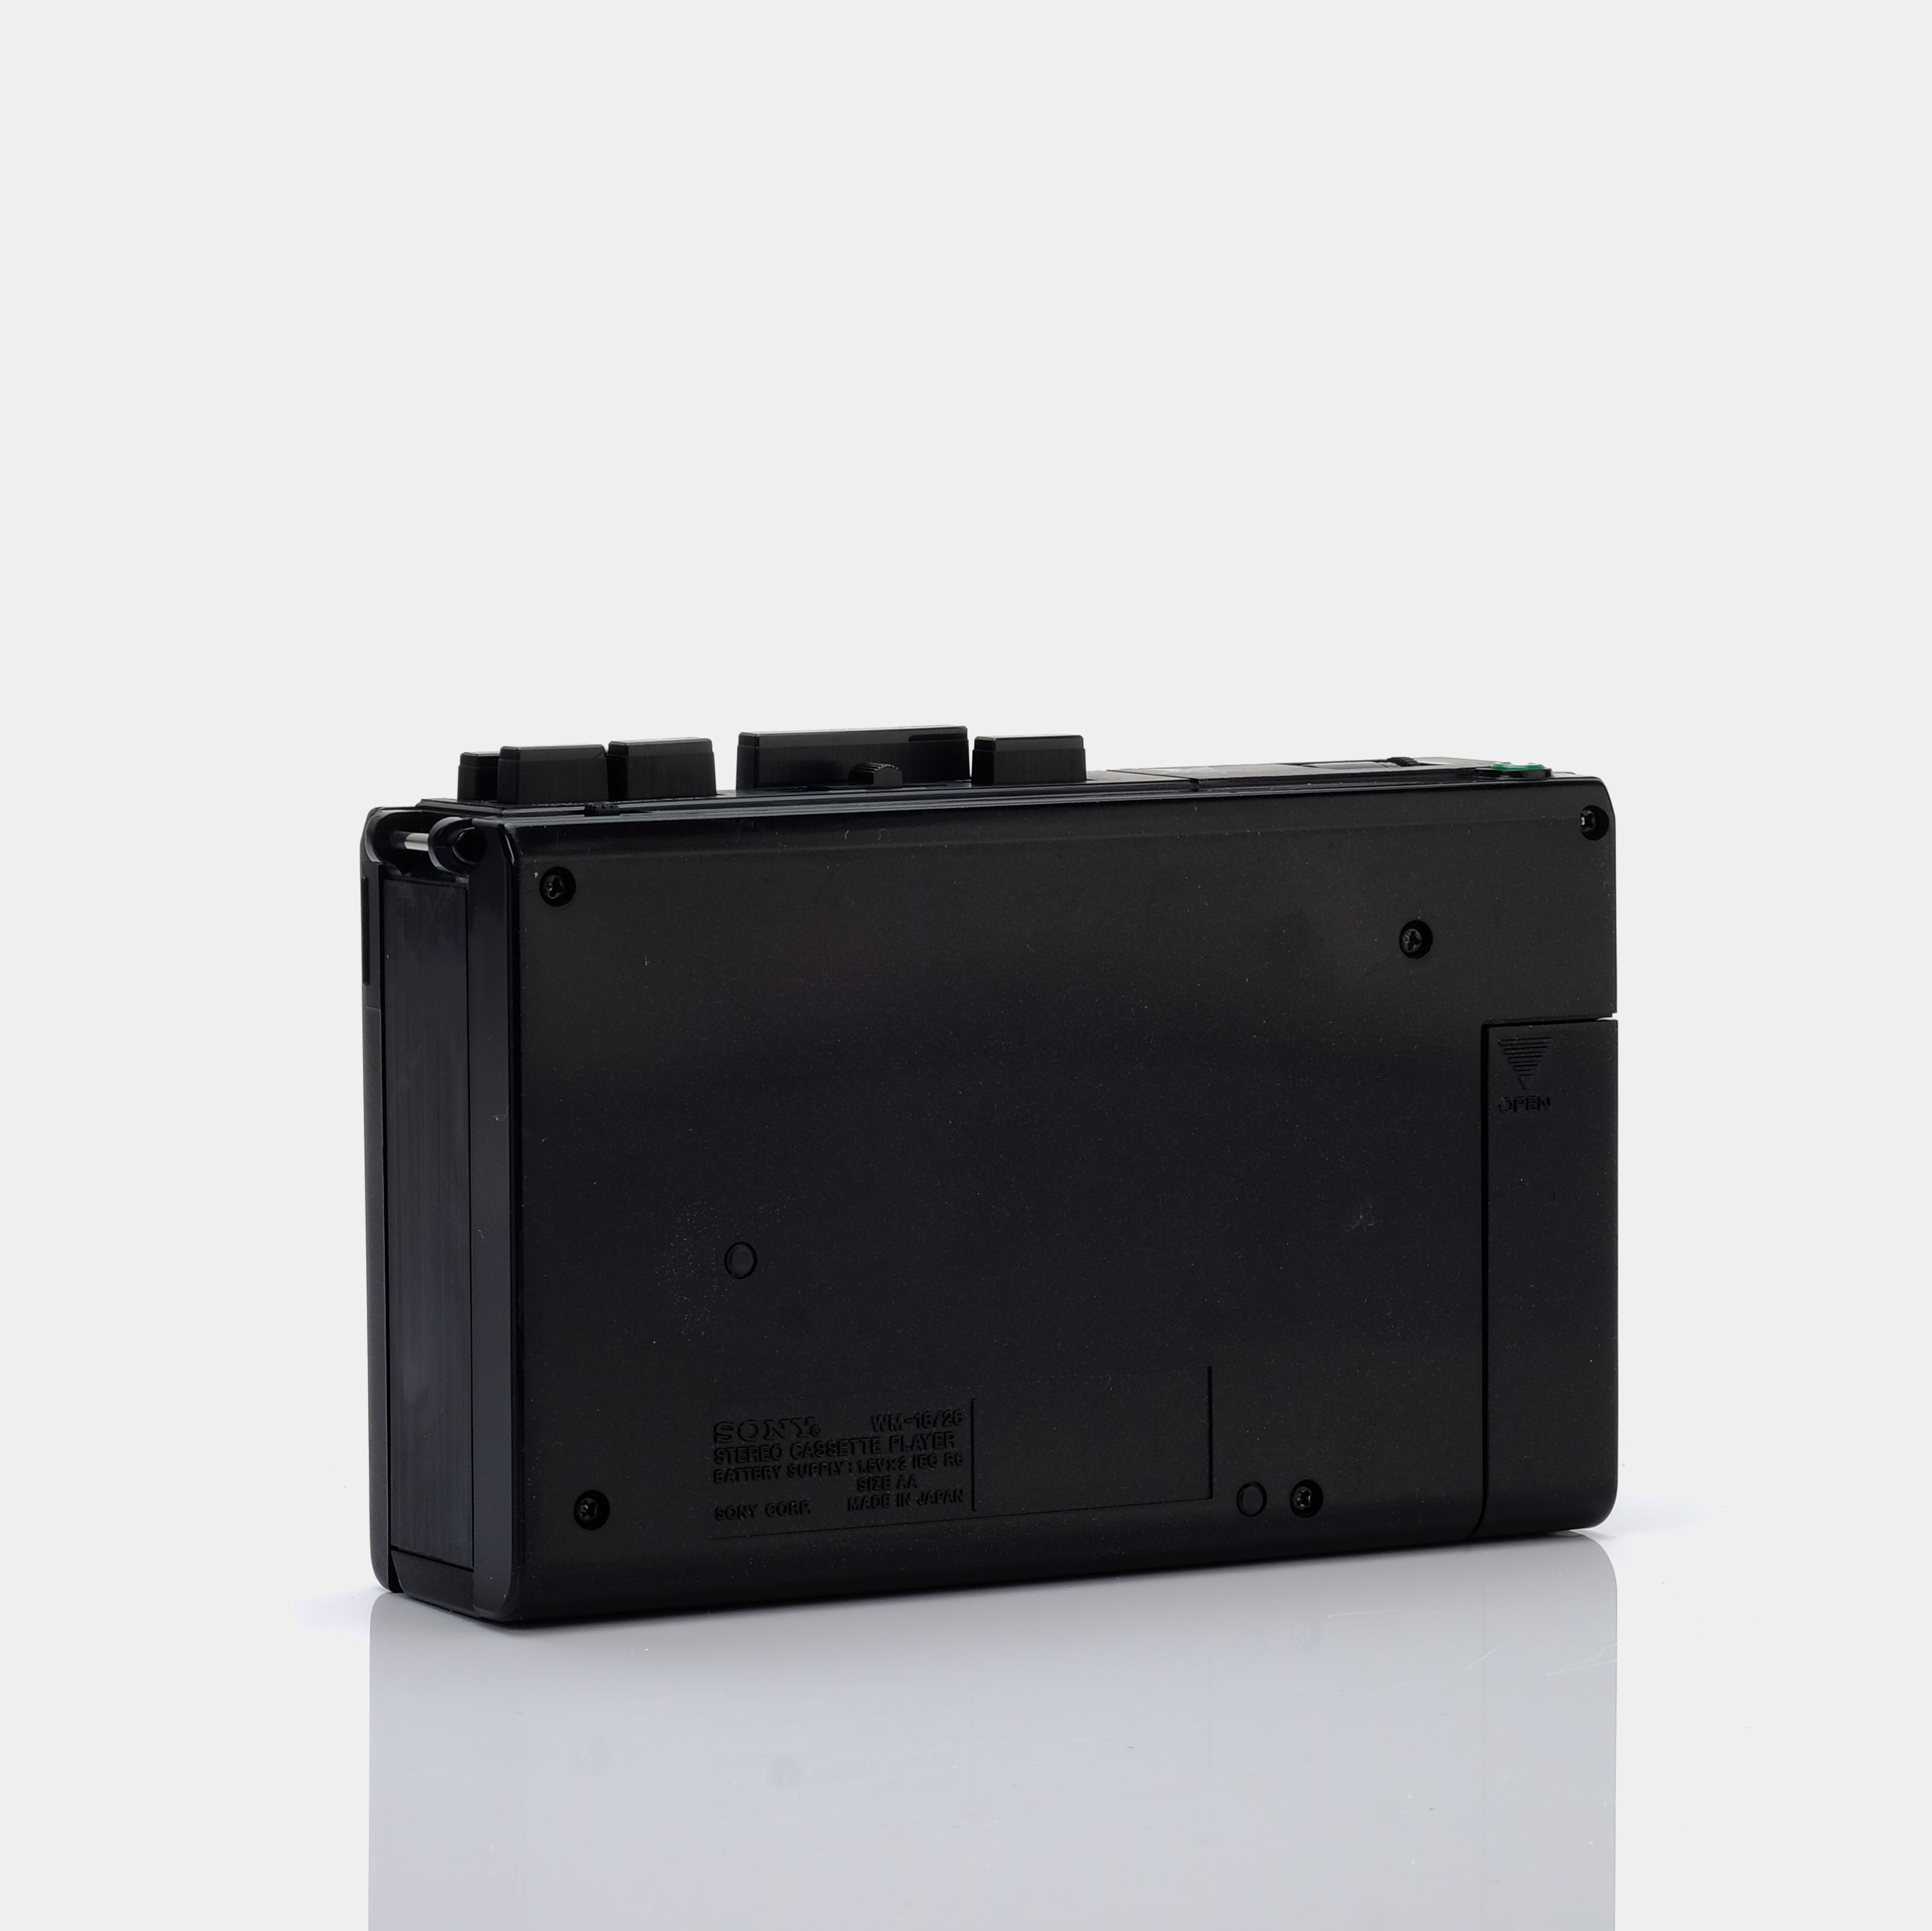 Sony Walkman WM-18 Portable Cassette Player